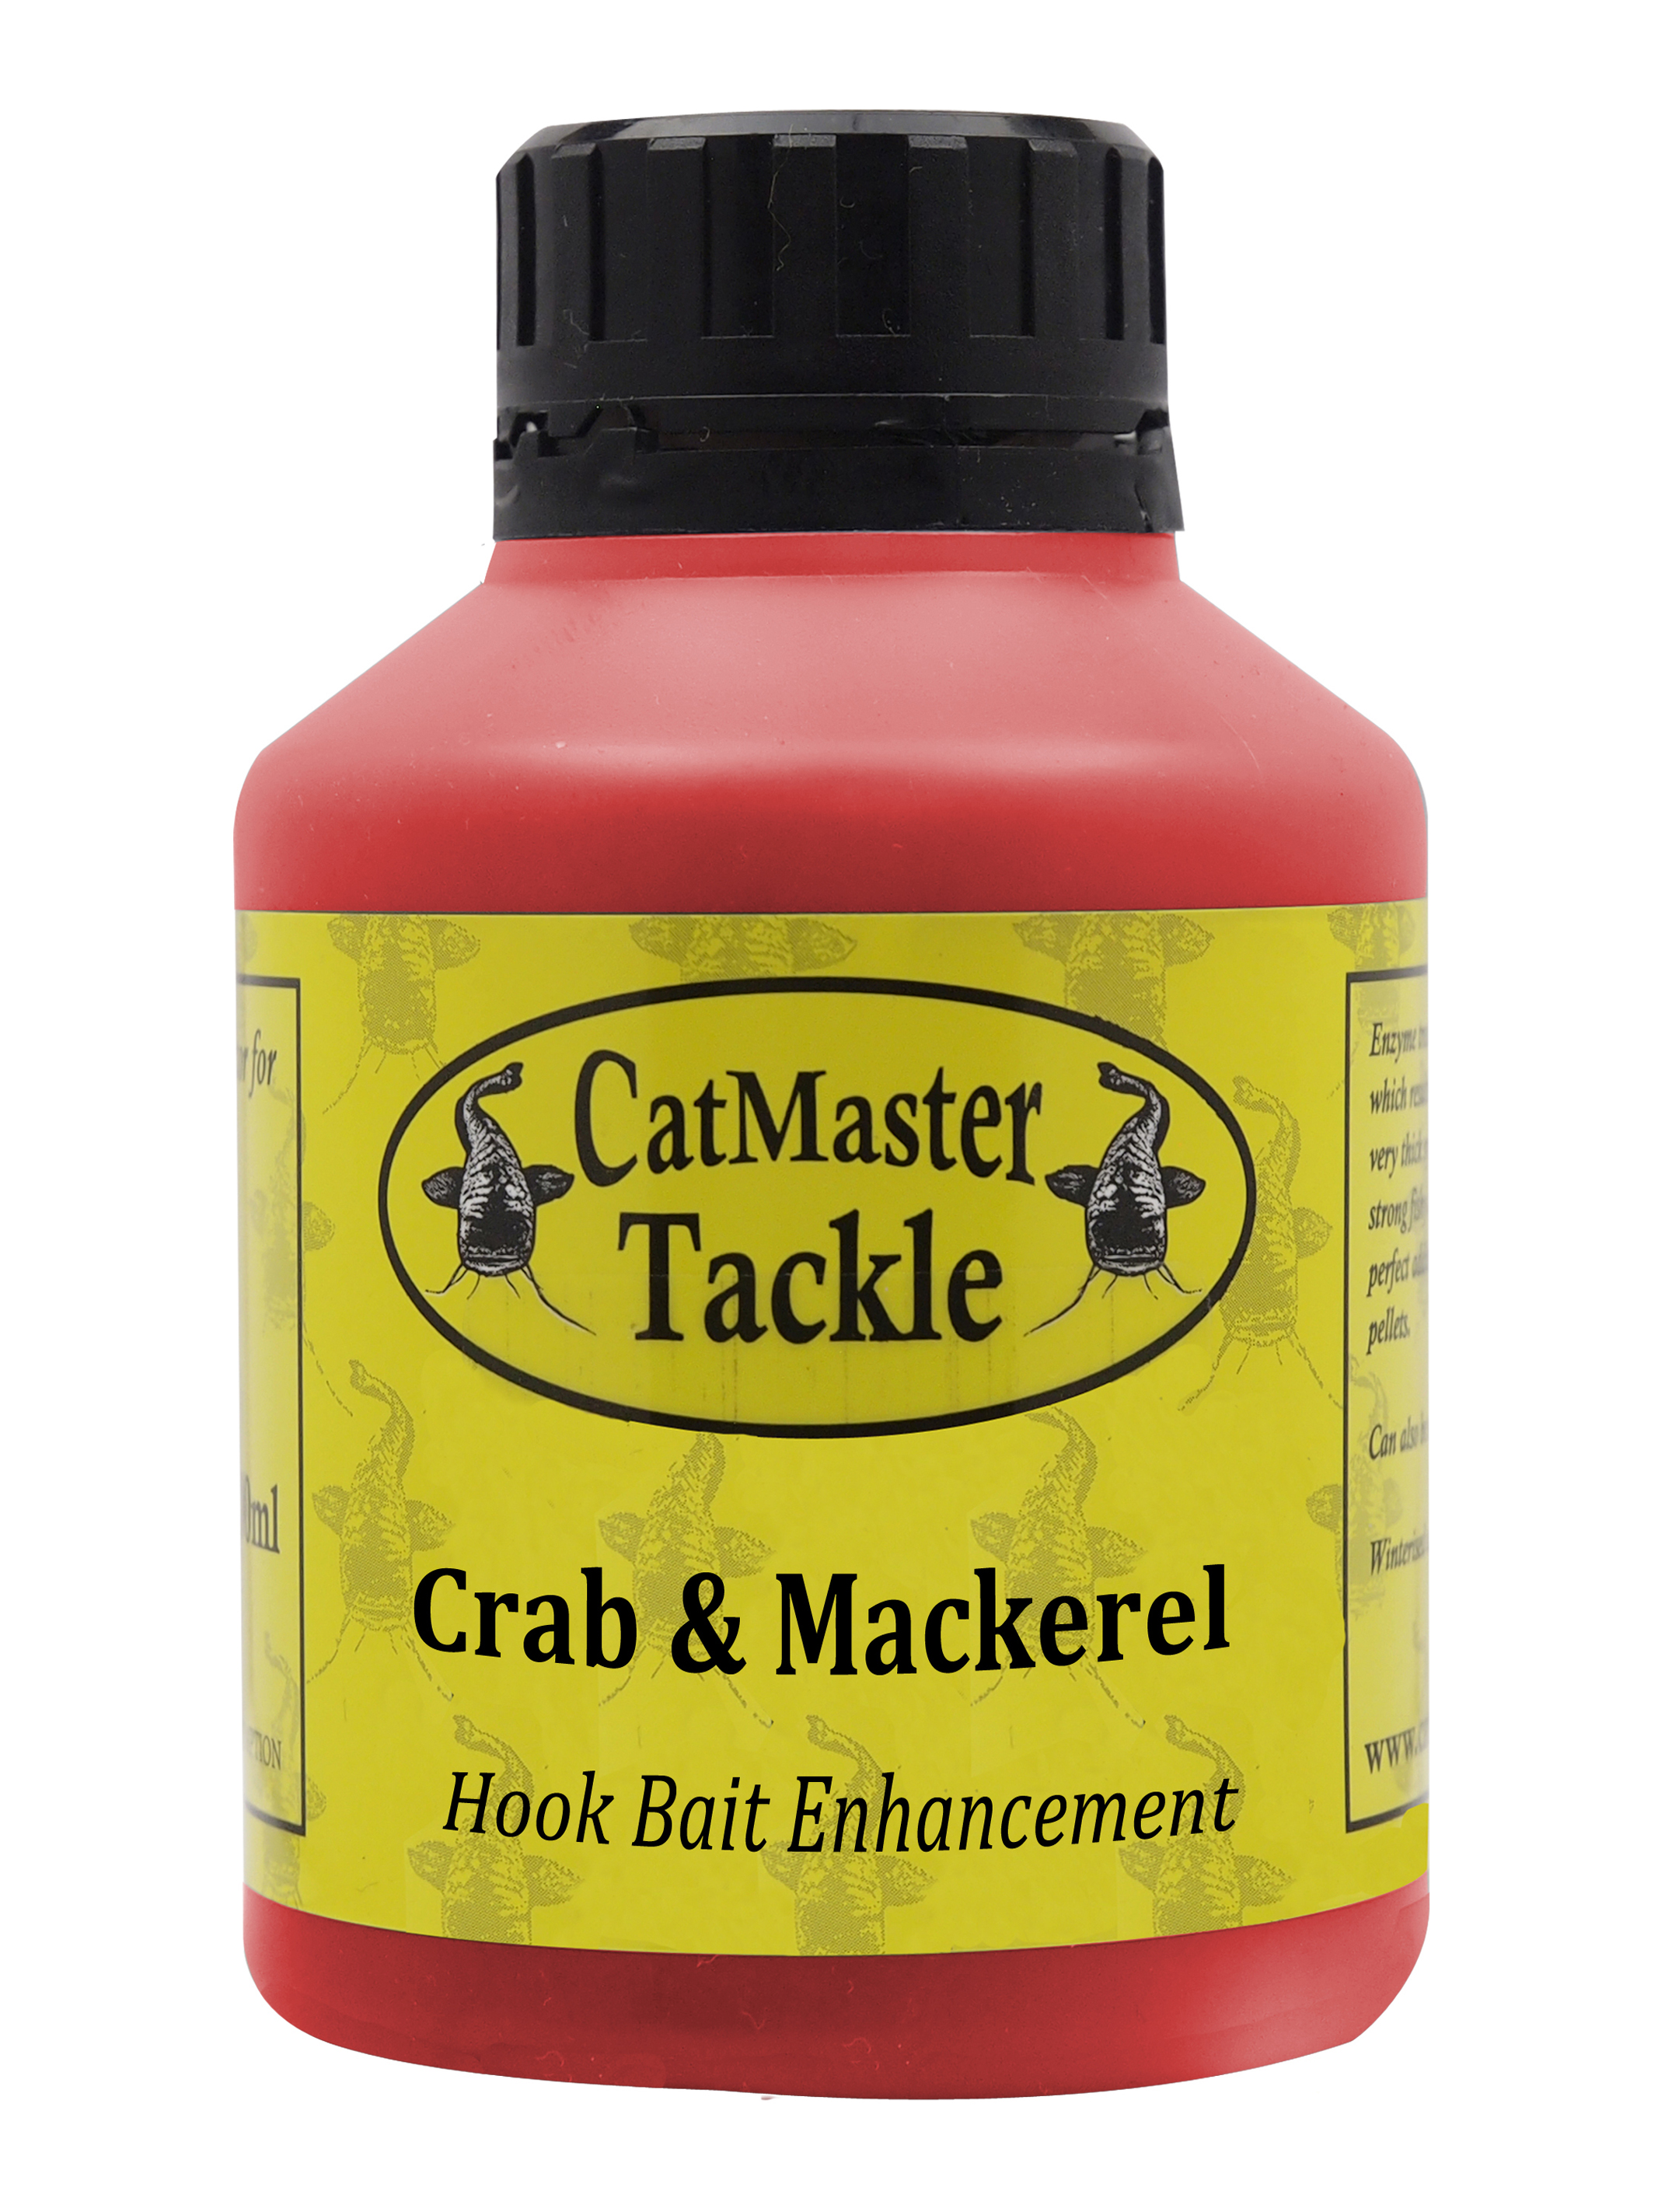 CatMaster Tackle Hookbait Enhancer Crab & Mackerel (Red)